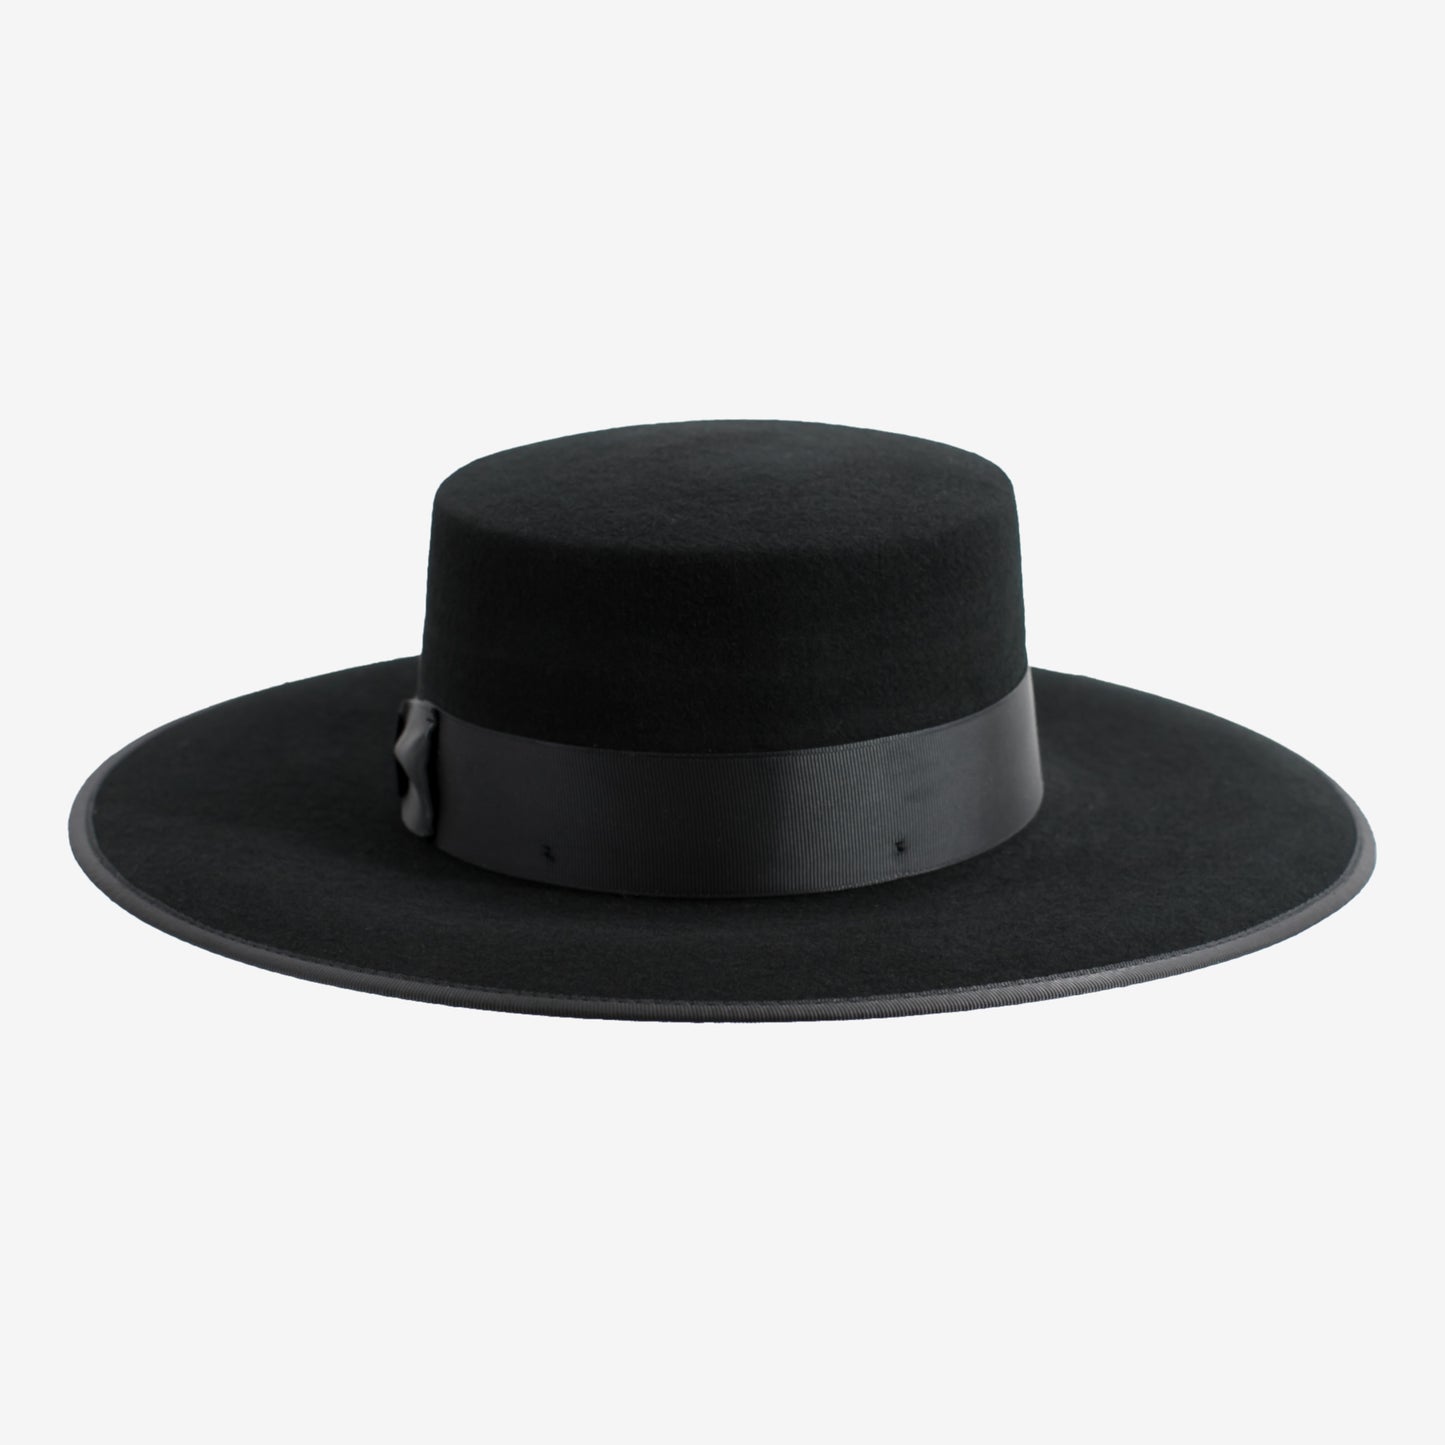 mindo-hats-claudia-cordobes-wool-hat-black-front